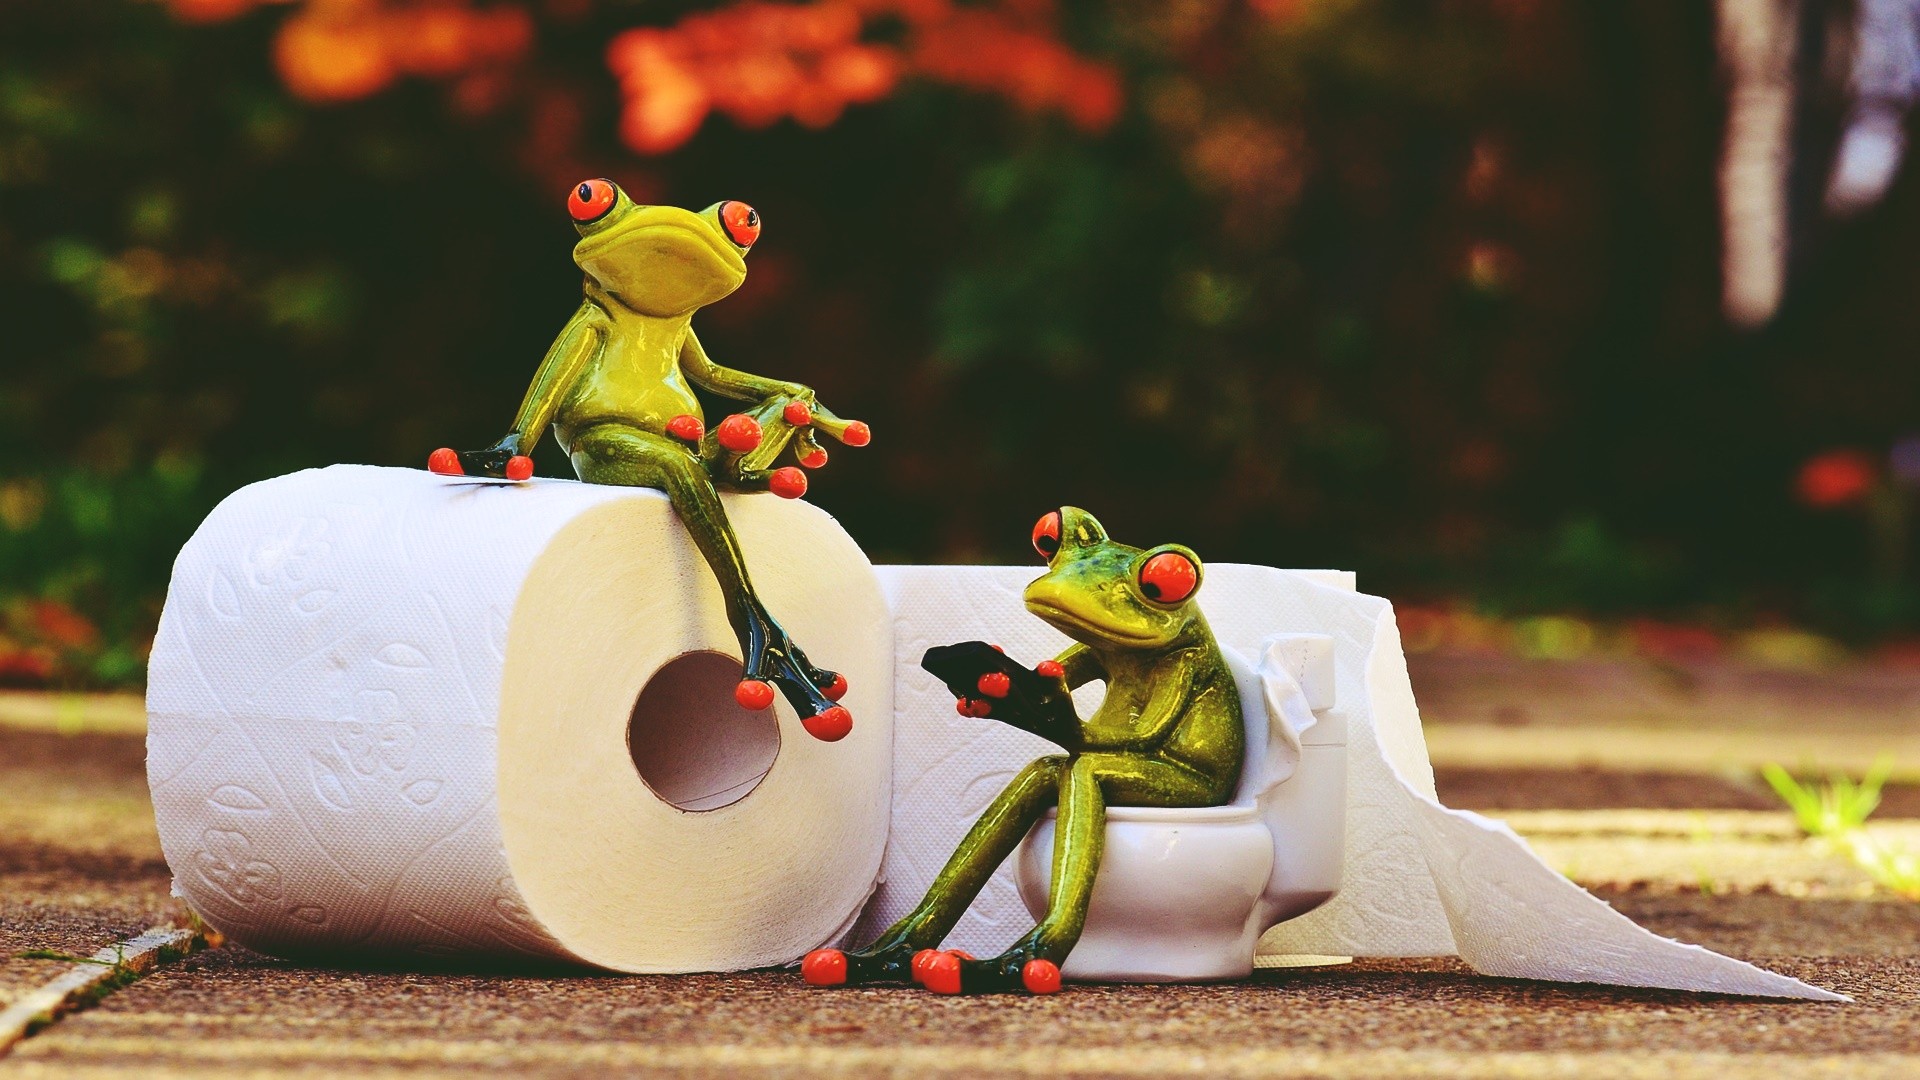 Retro Style Frog Toilet Paper Animals 1920x1080